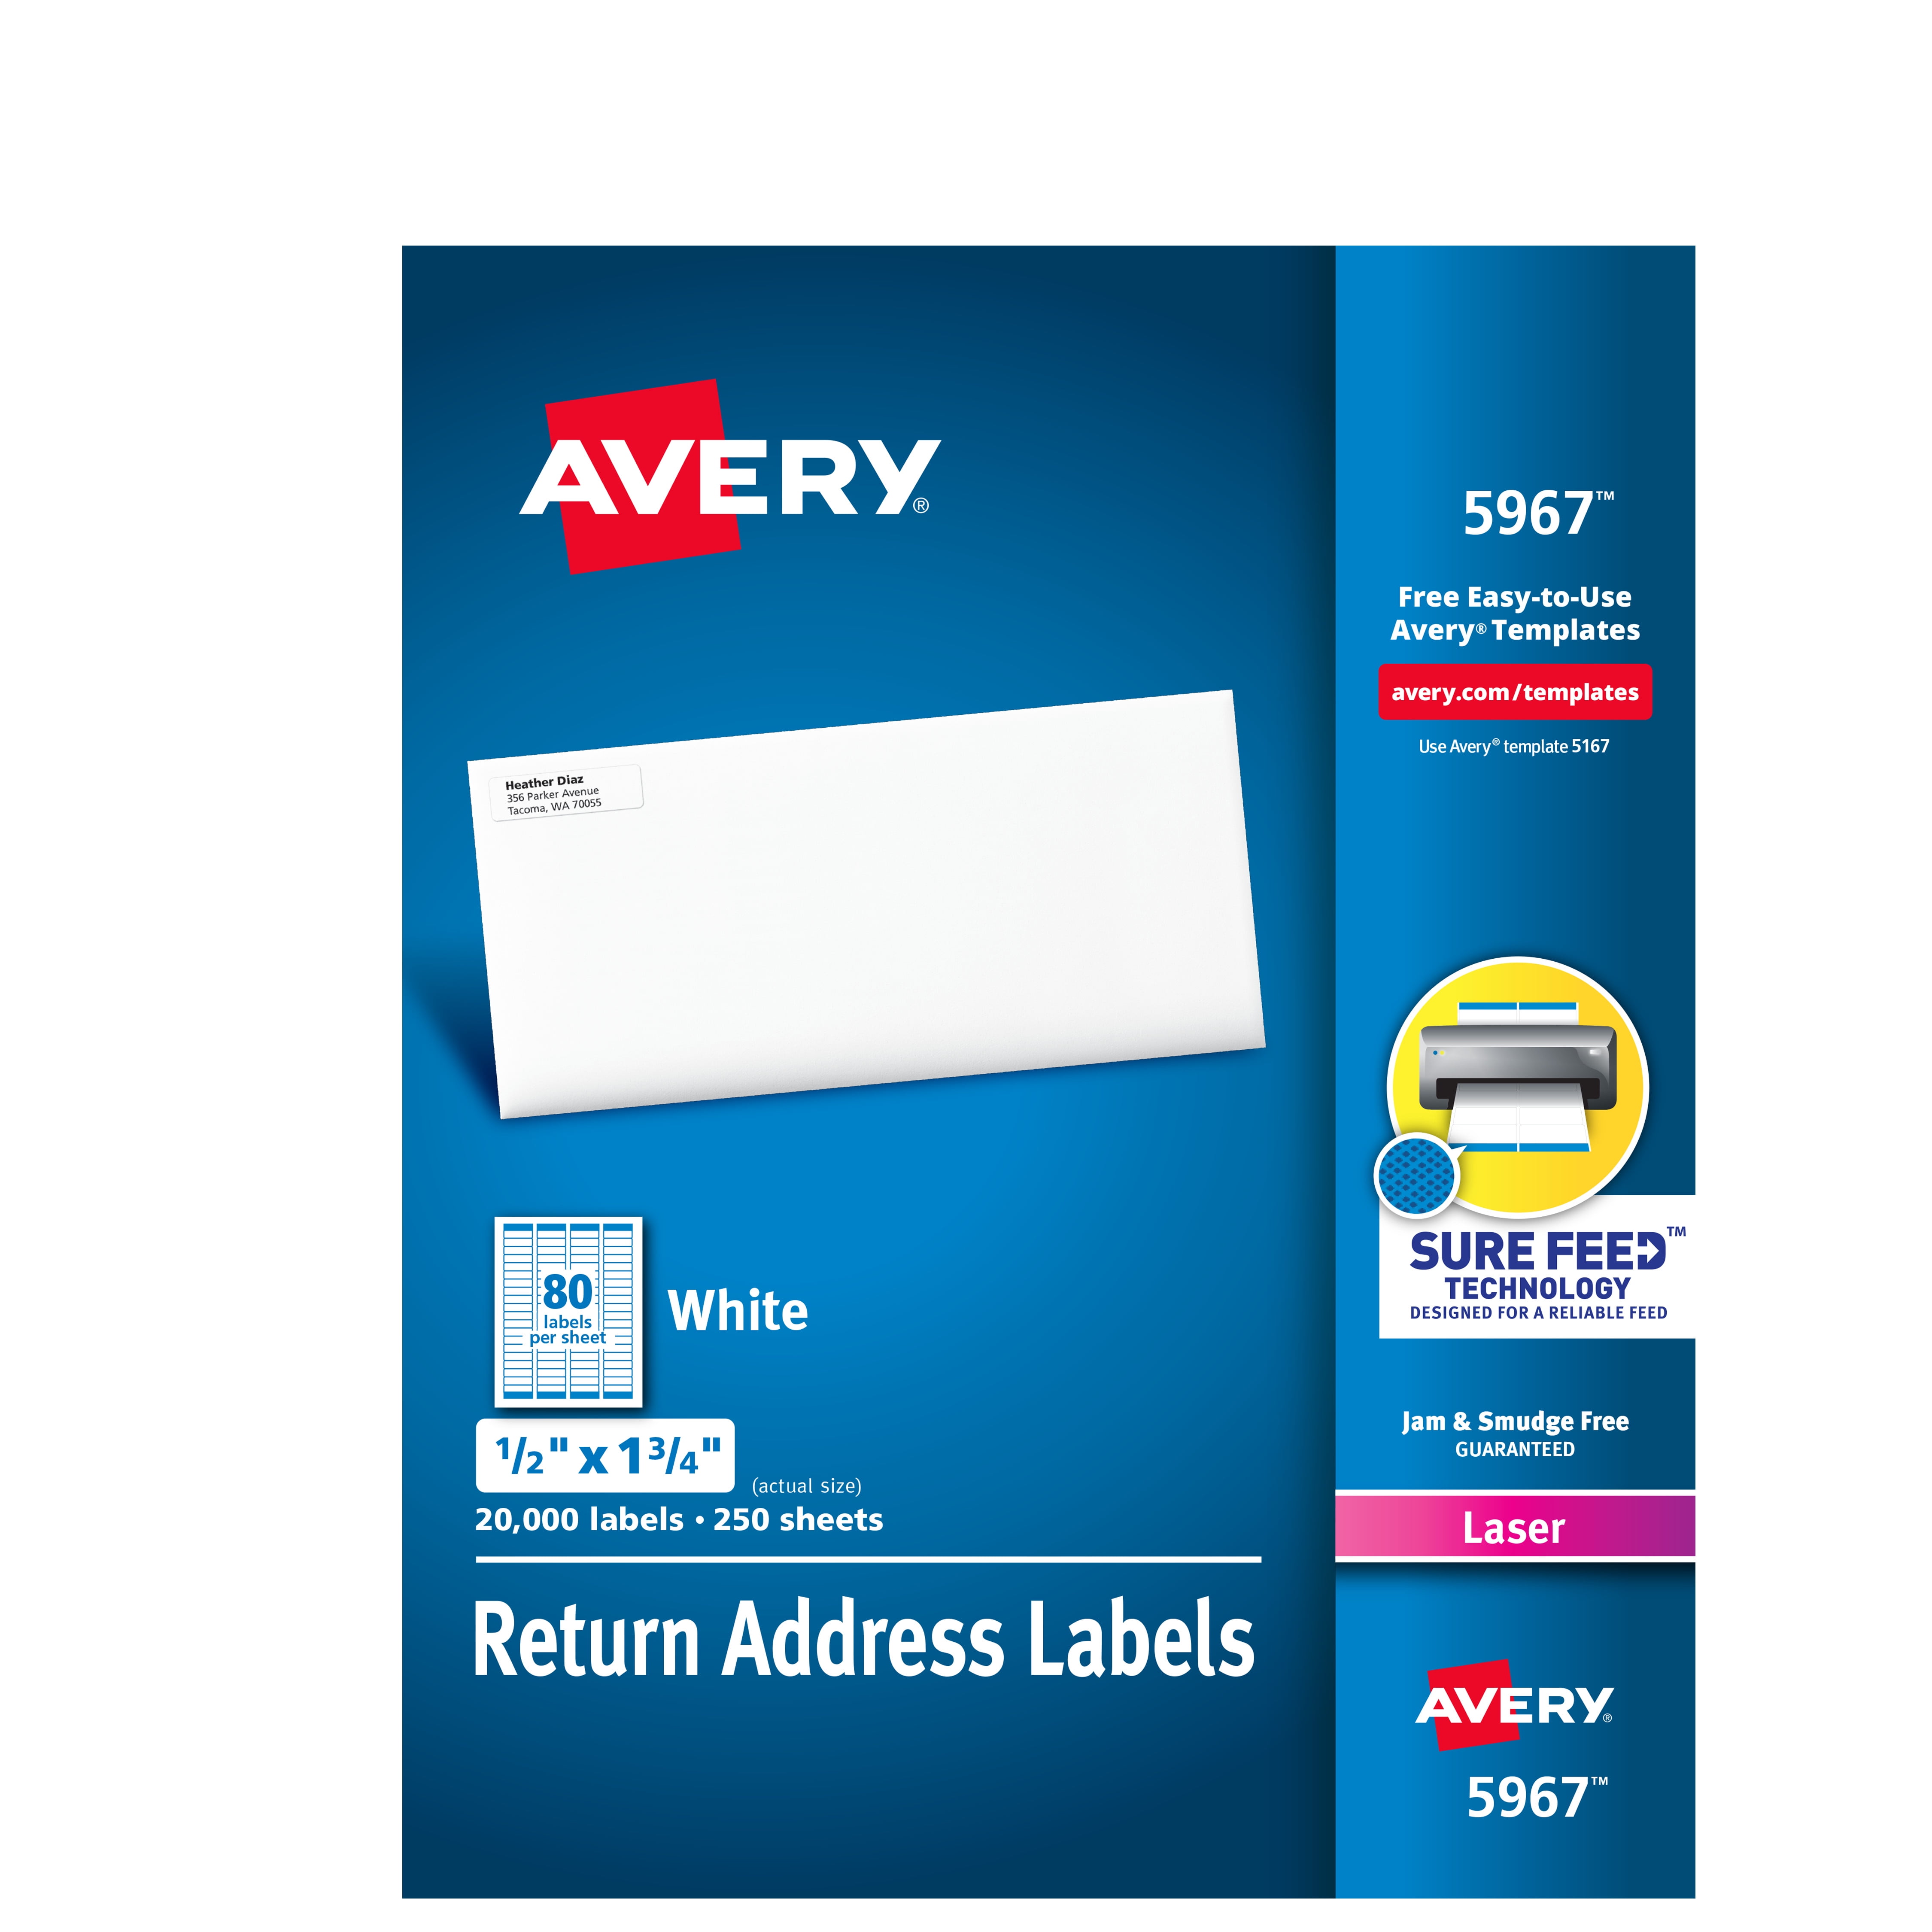 avery mac label expert free